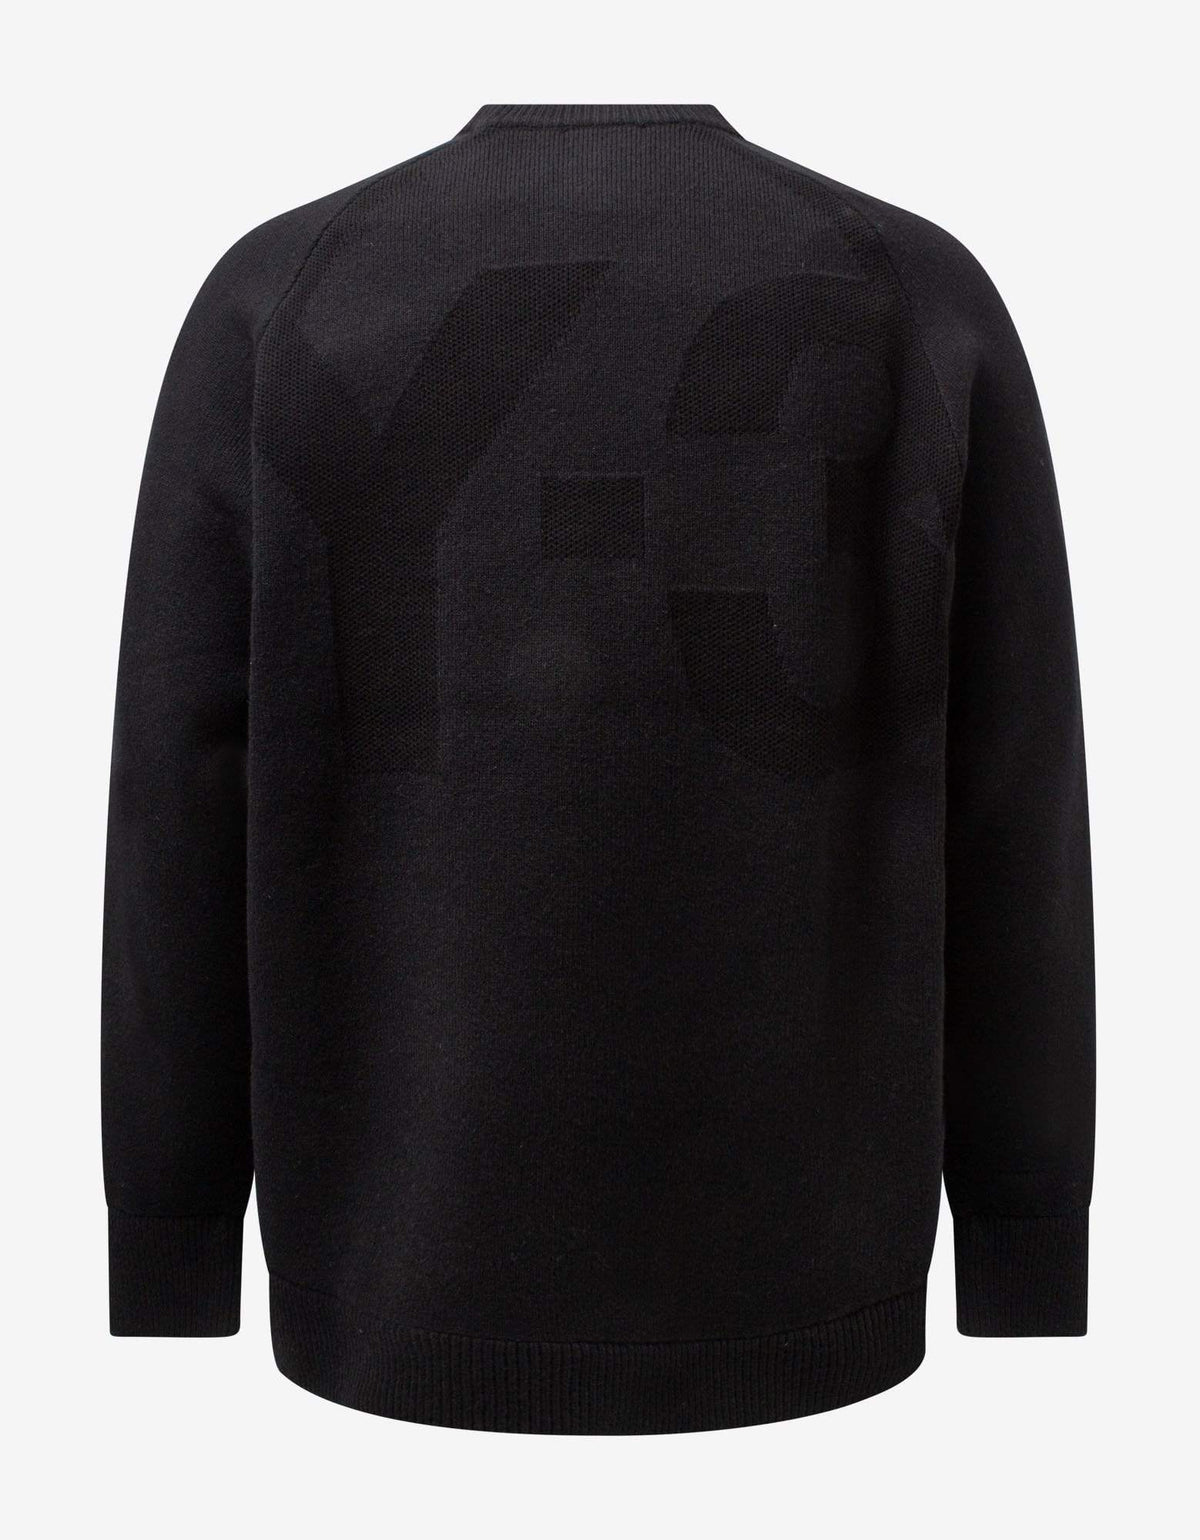 Y-3 Black Classic Logo Sweater